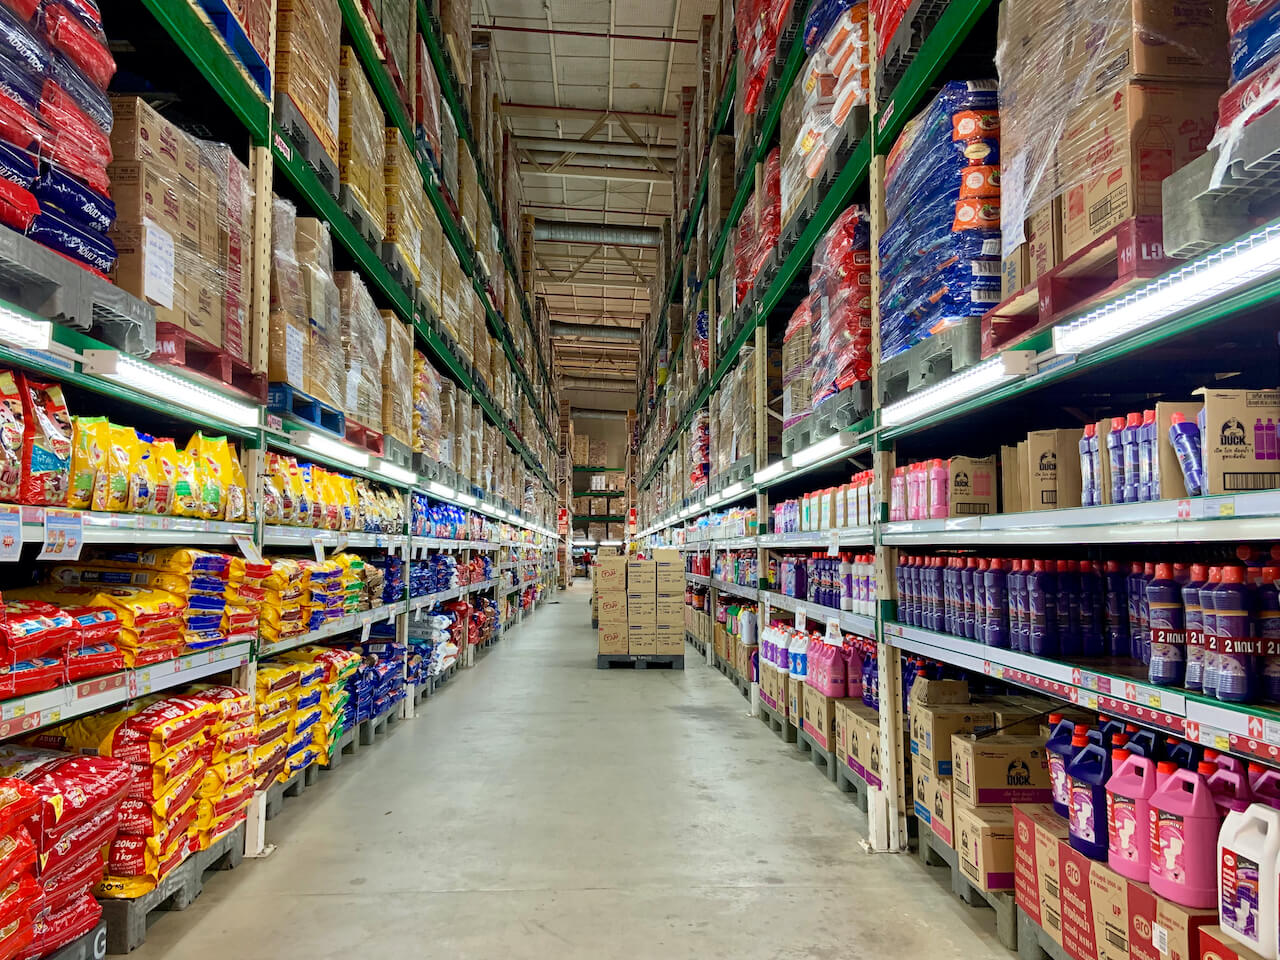 Racks of foodstuffs in large warehouse